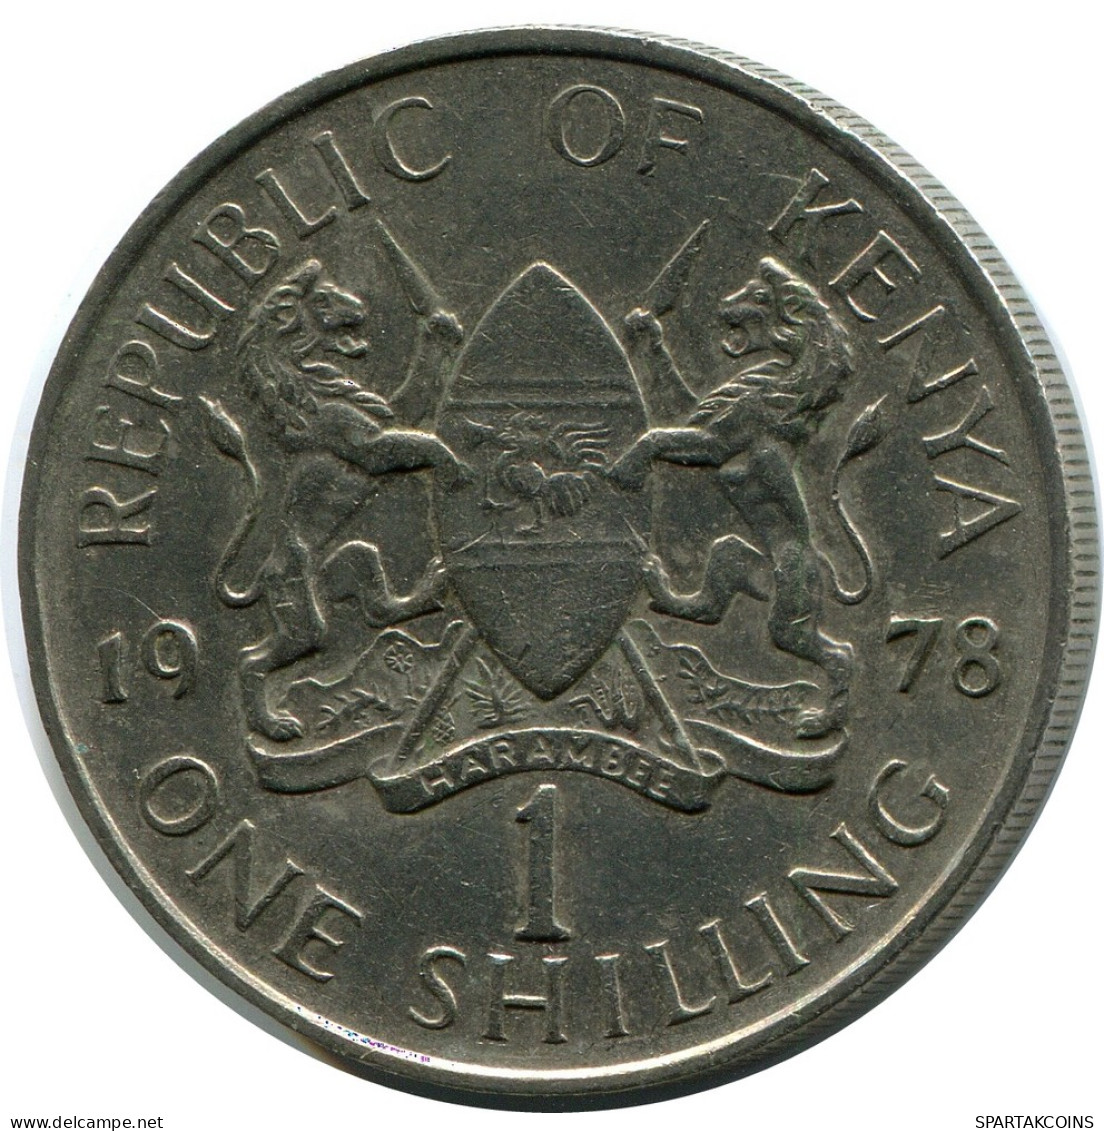 1 SHILLING 1978 KENYA Coin #AZ188.U - Kenya